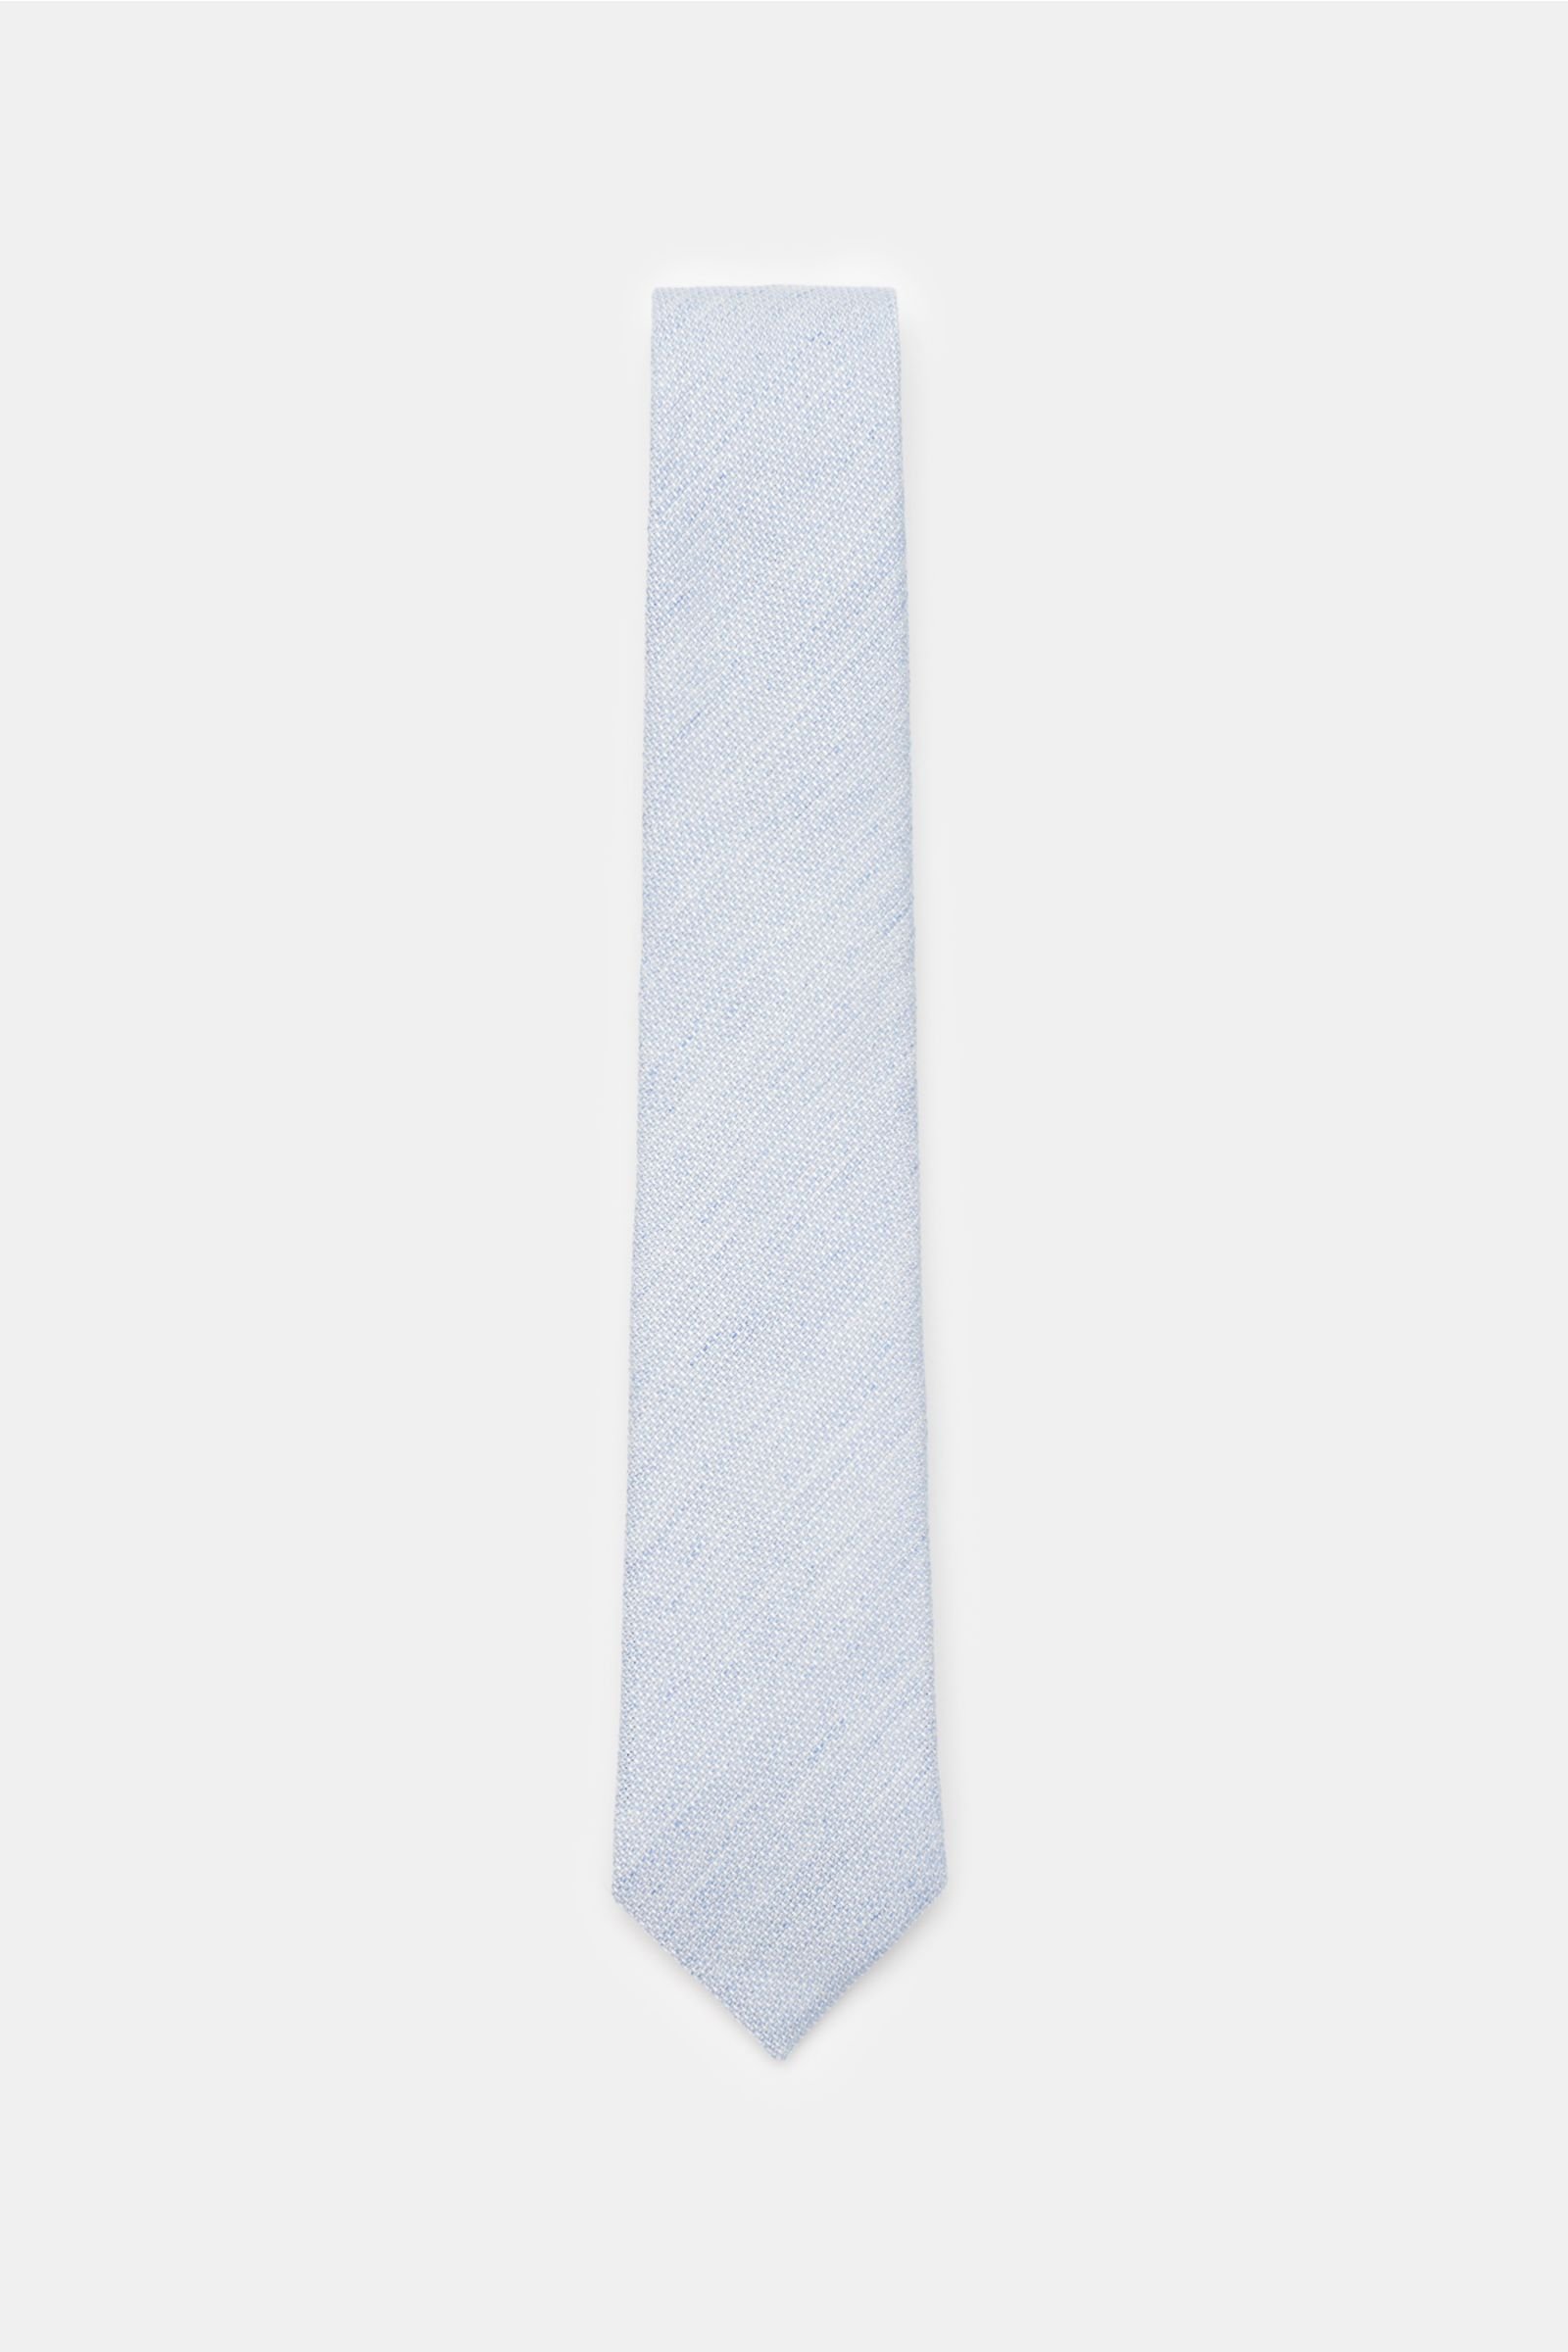 Tie light blue